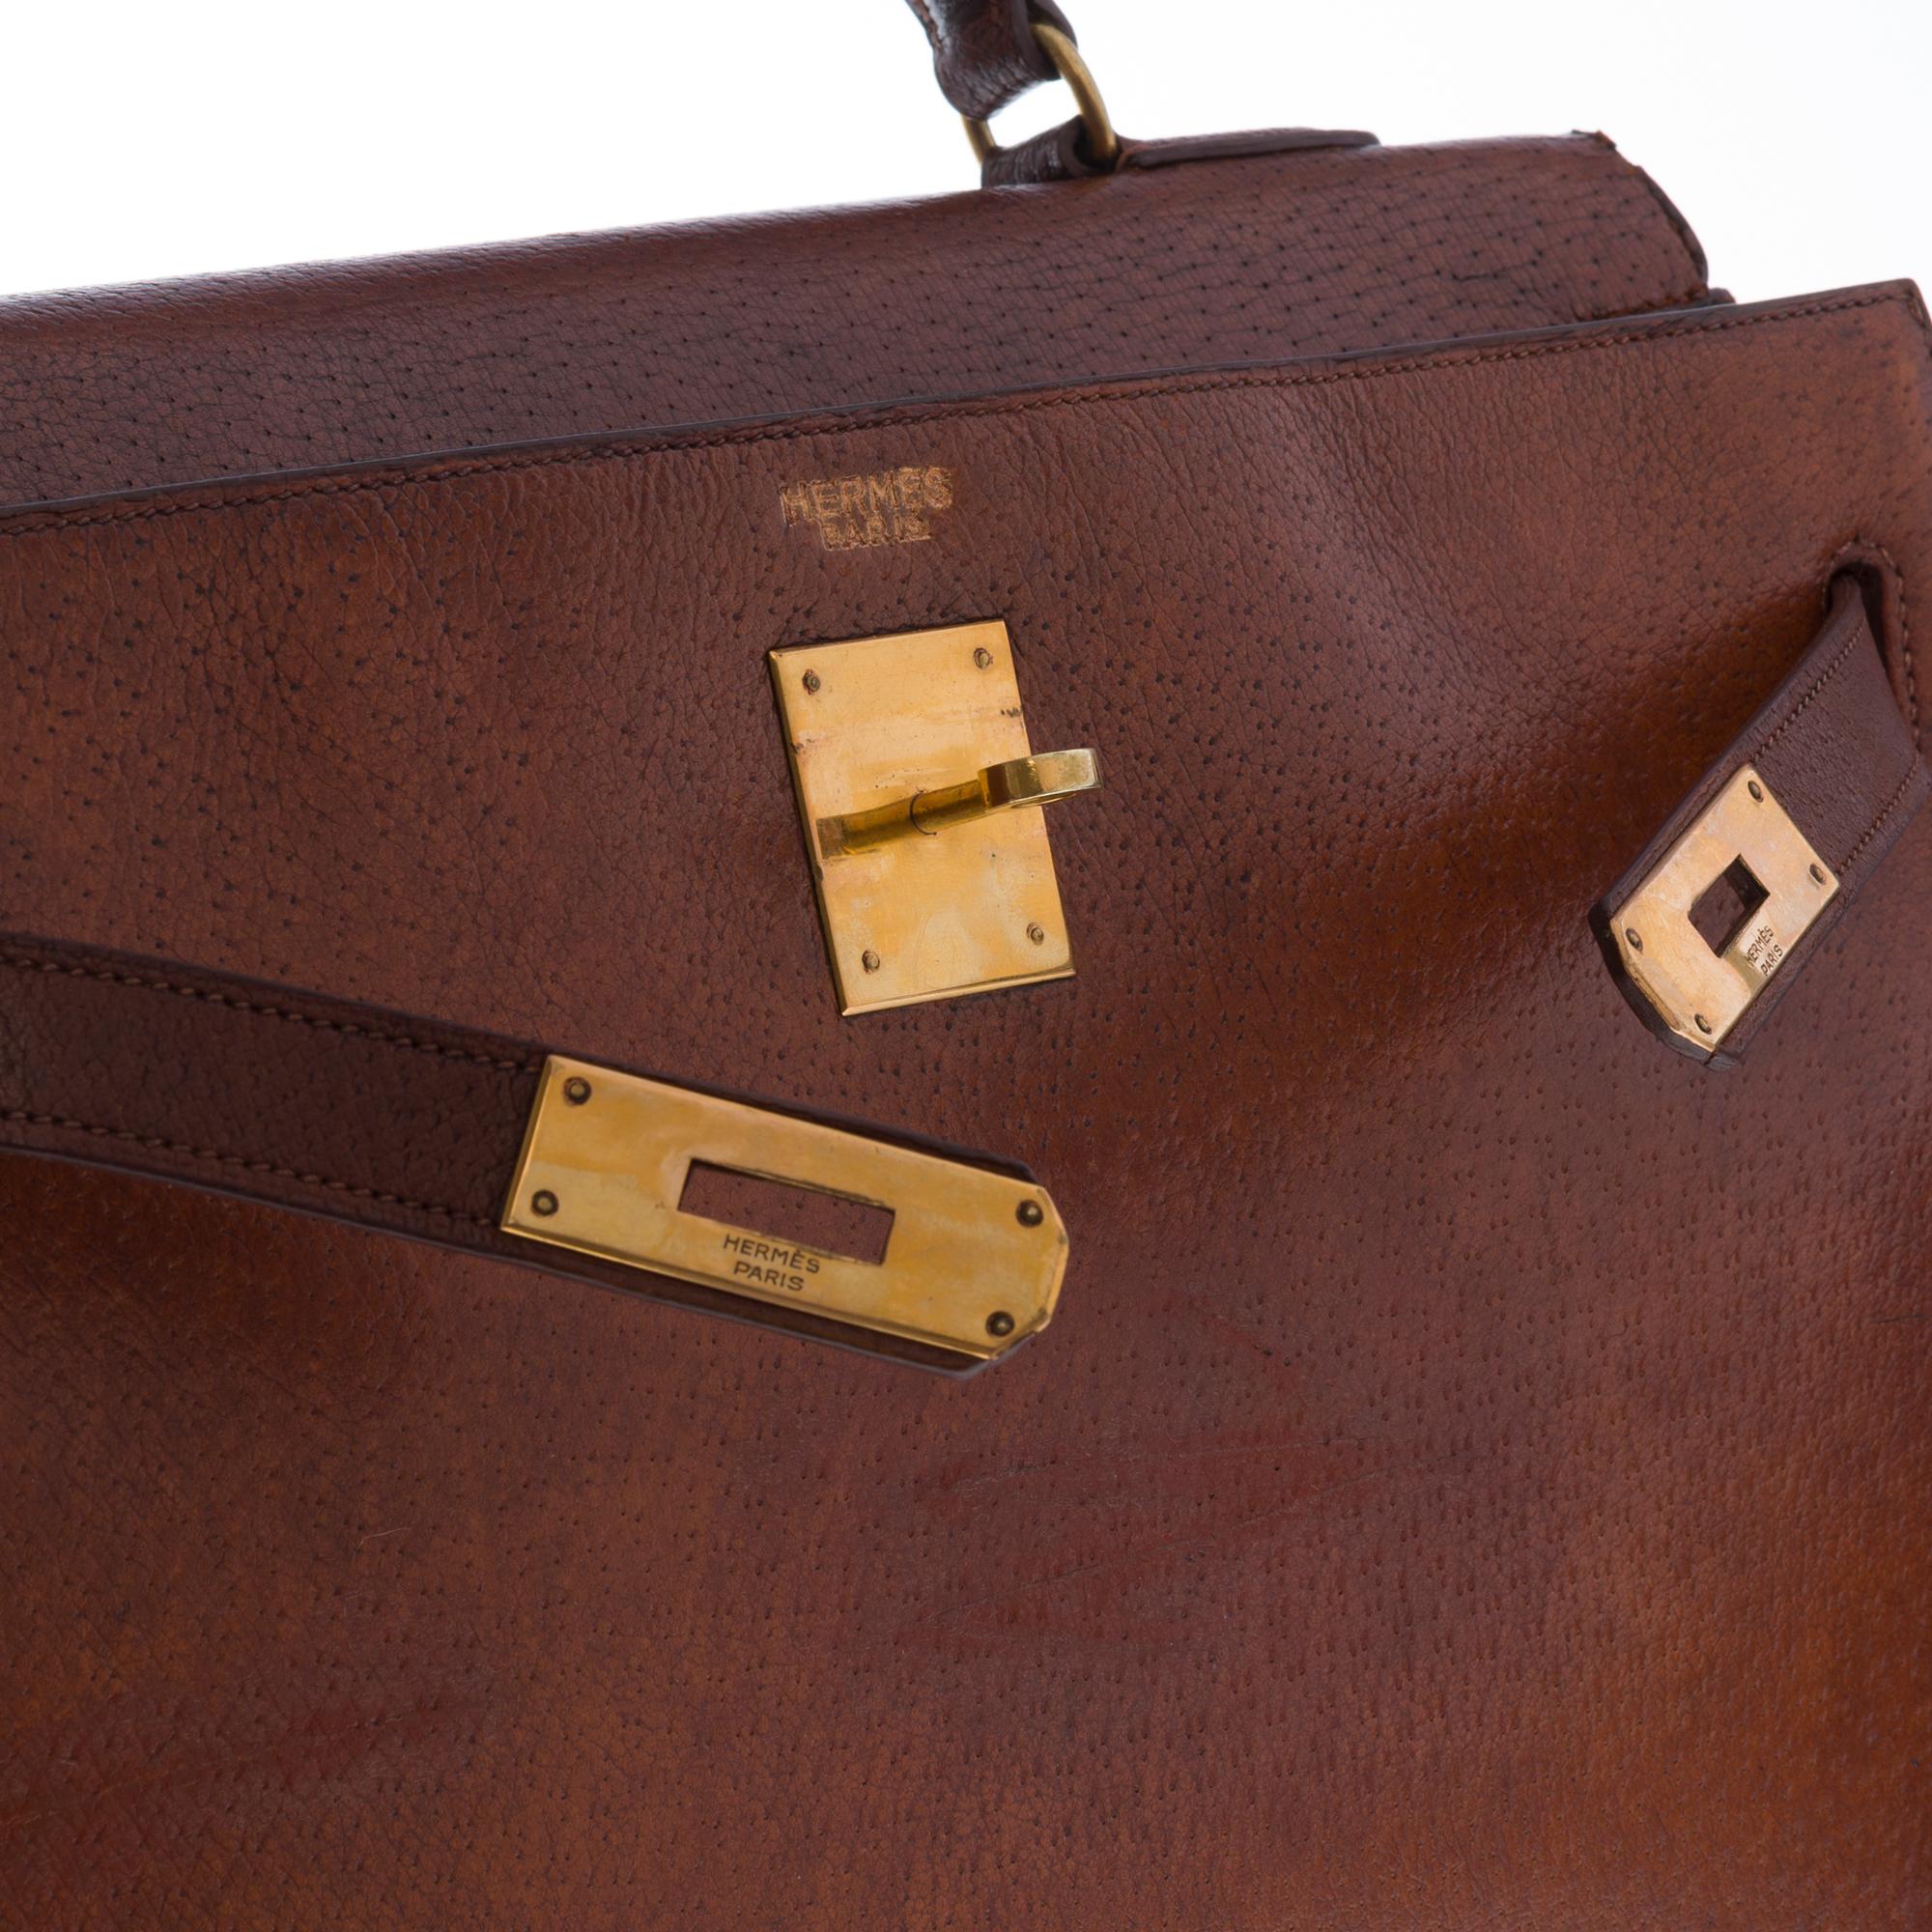 Hermès Kelly 32 handbag with strap in Brown Pecari leather, GHW 1